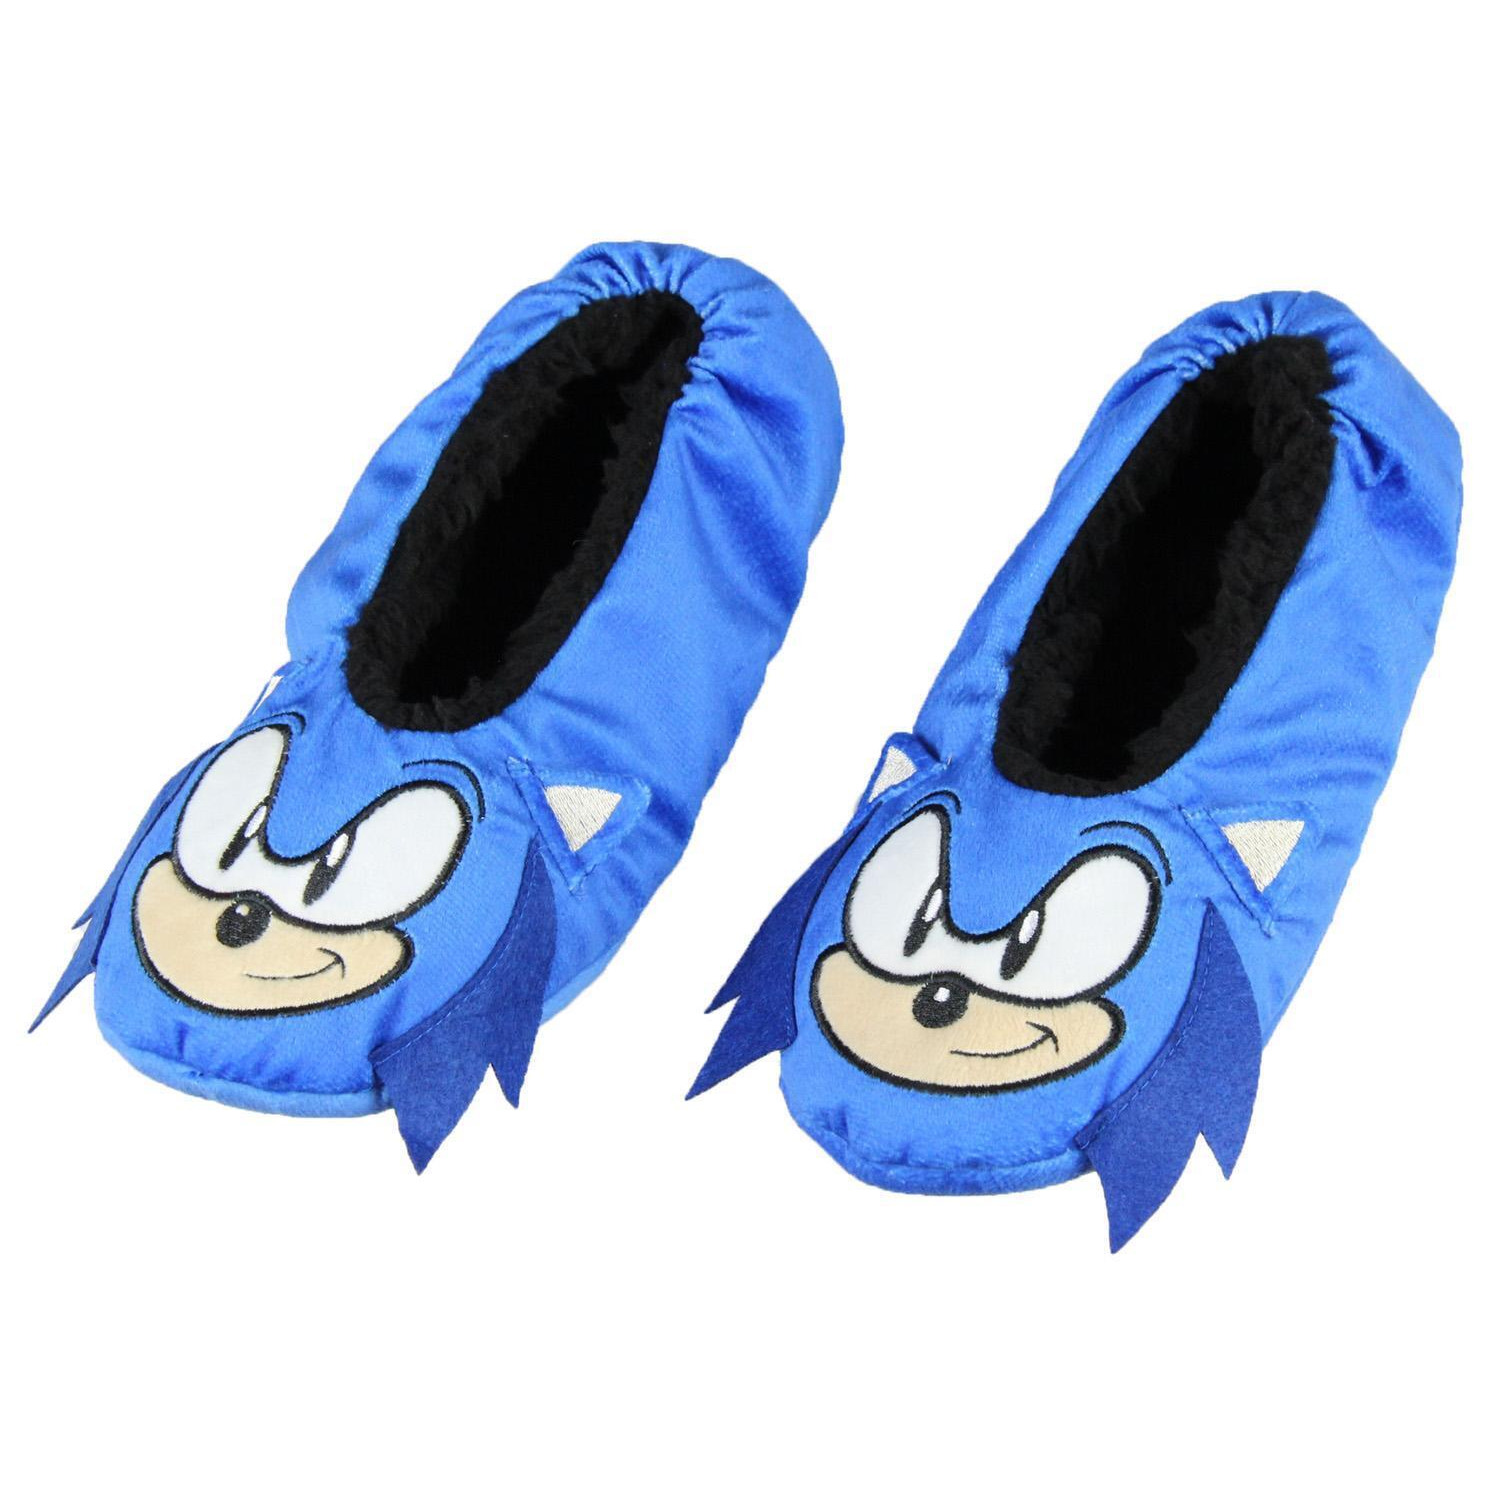 Sonic The Hedgehog Slippers 3D Character Slipper Socks with No-Slip Sole For Women Men